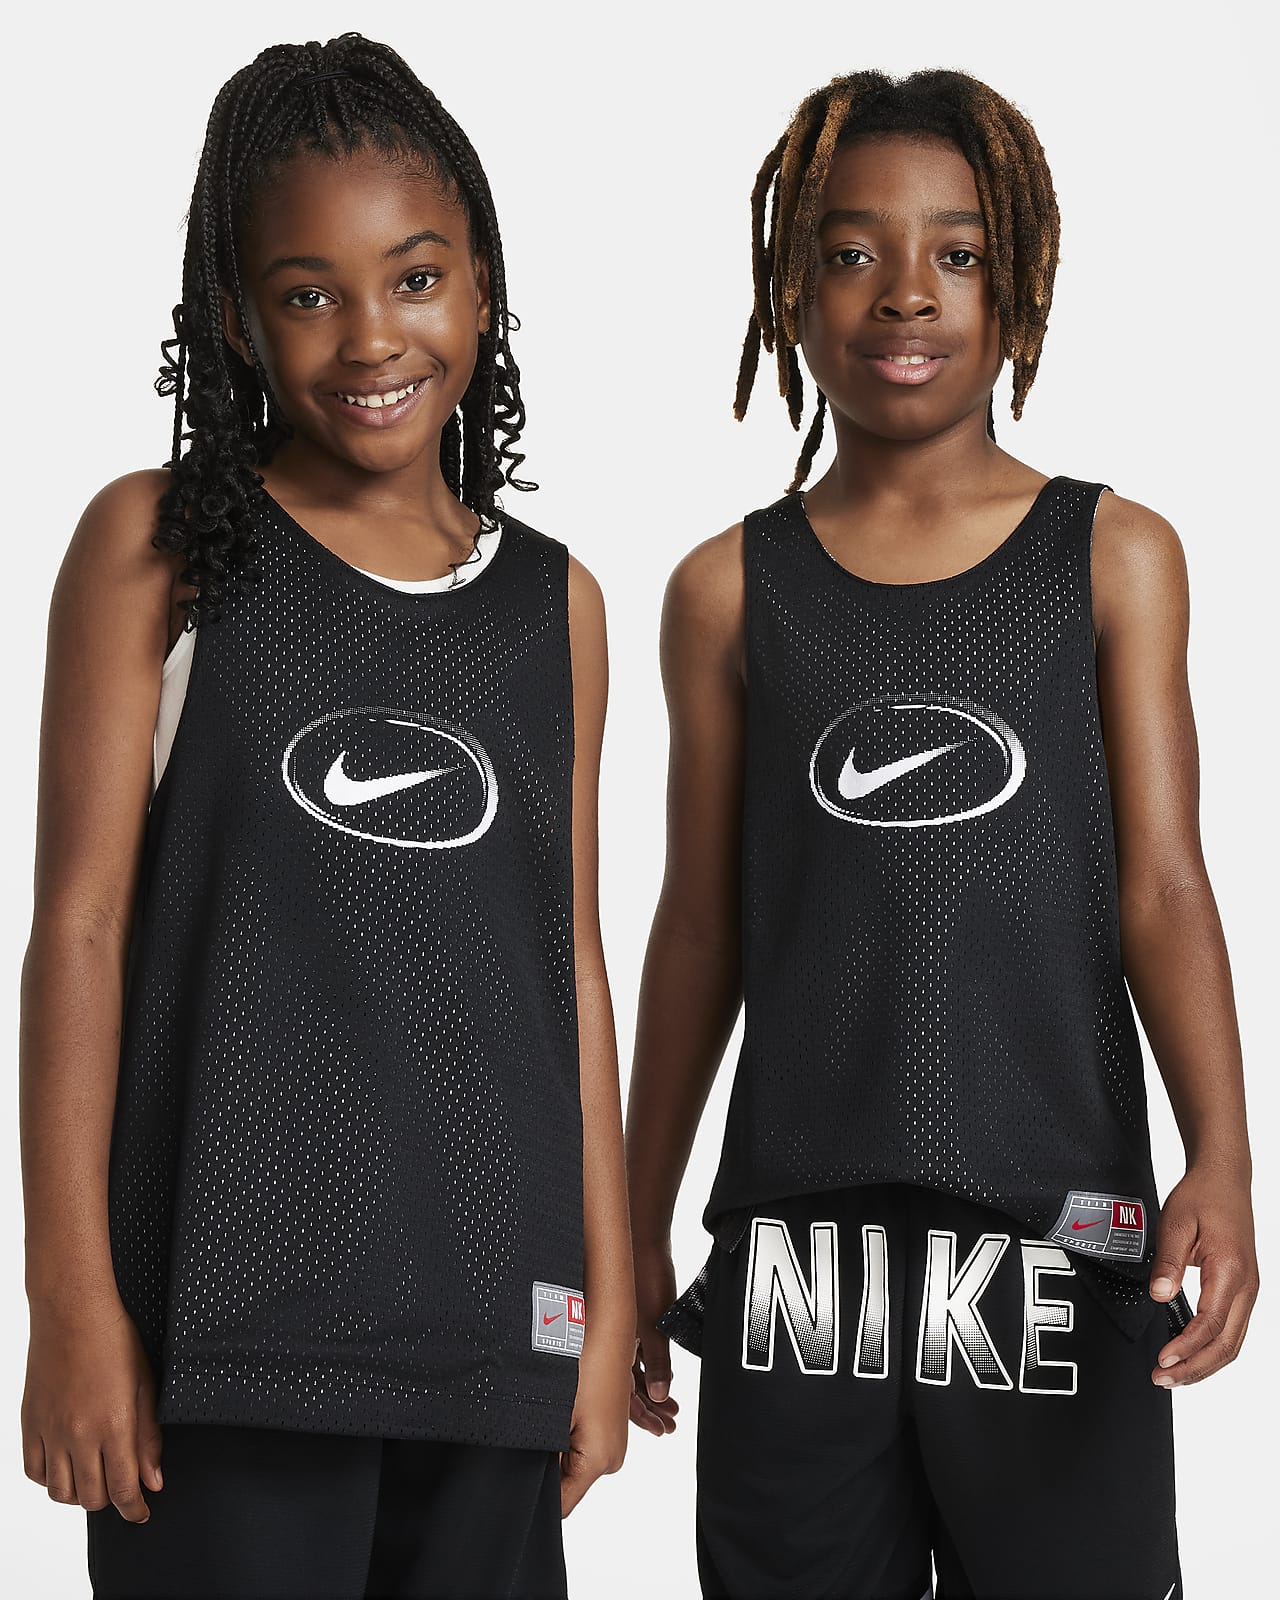 Nike Culture of Basketball 大童雙面球衣